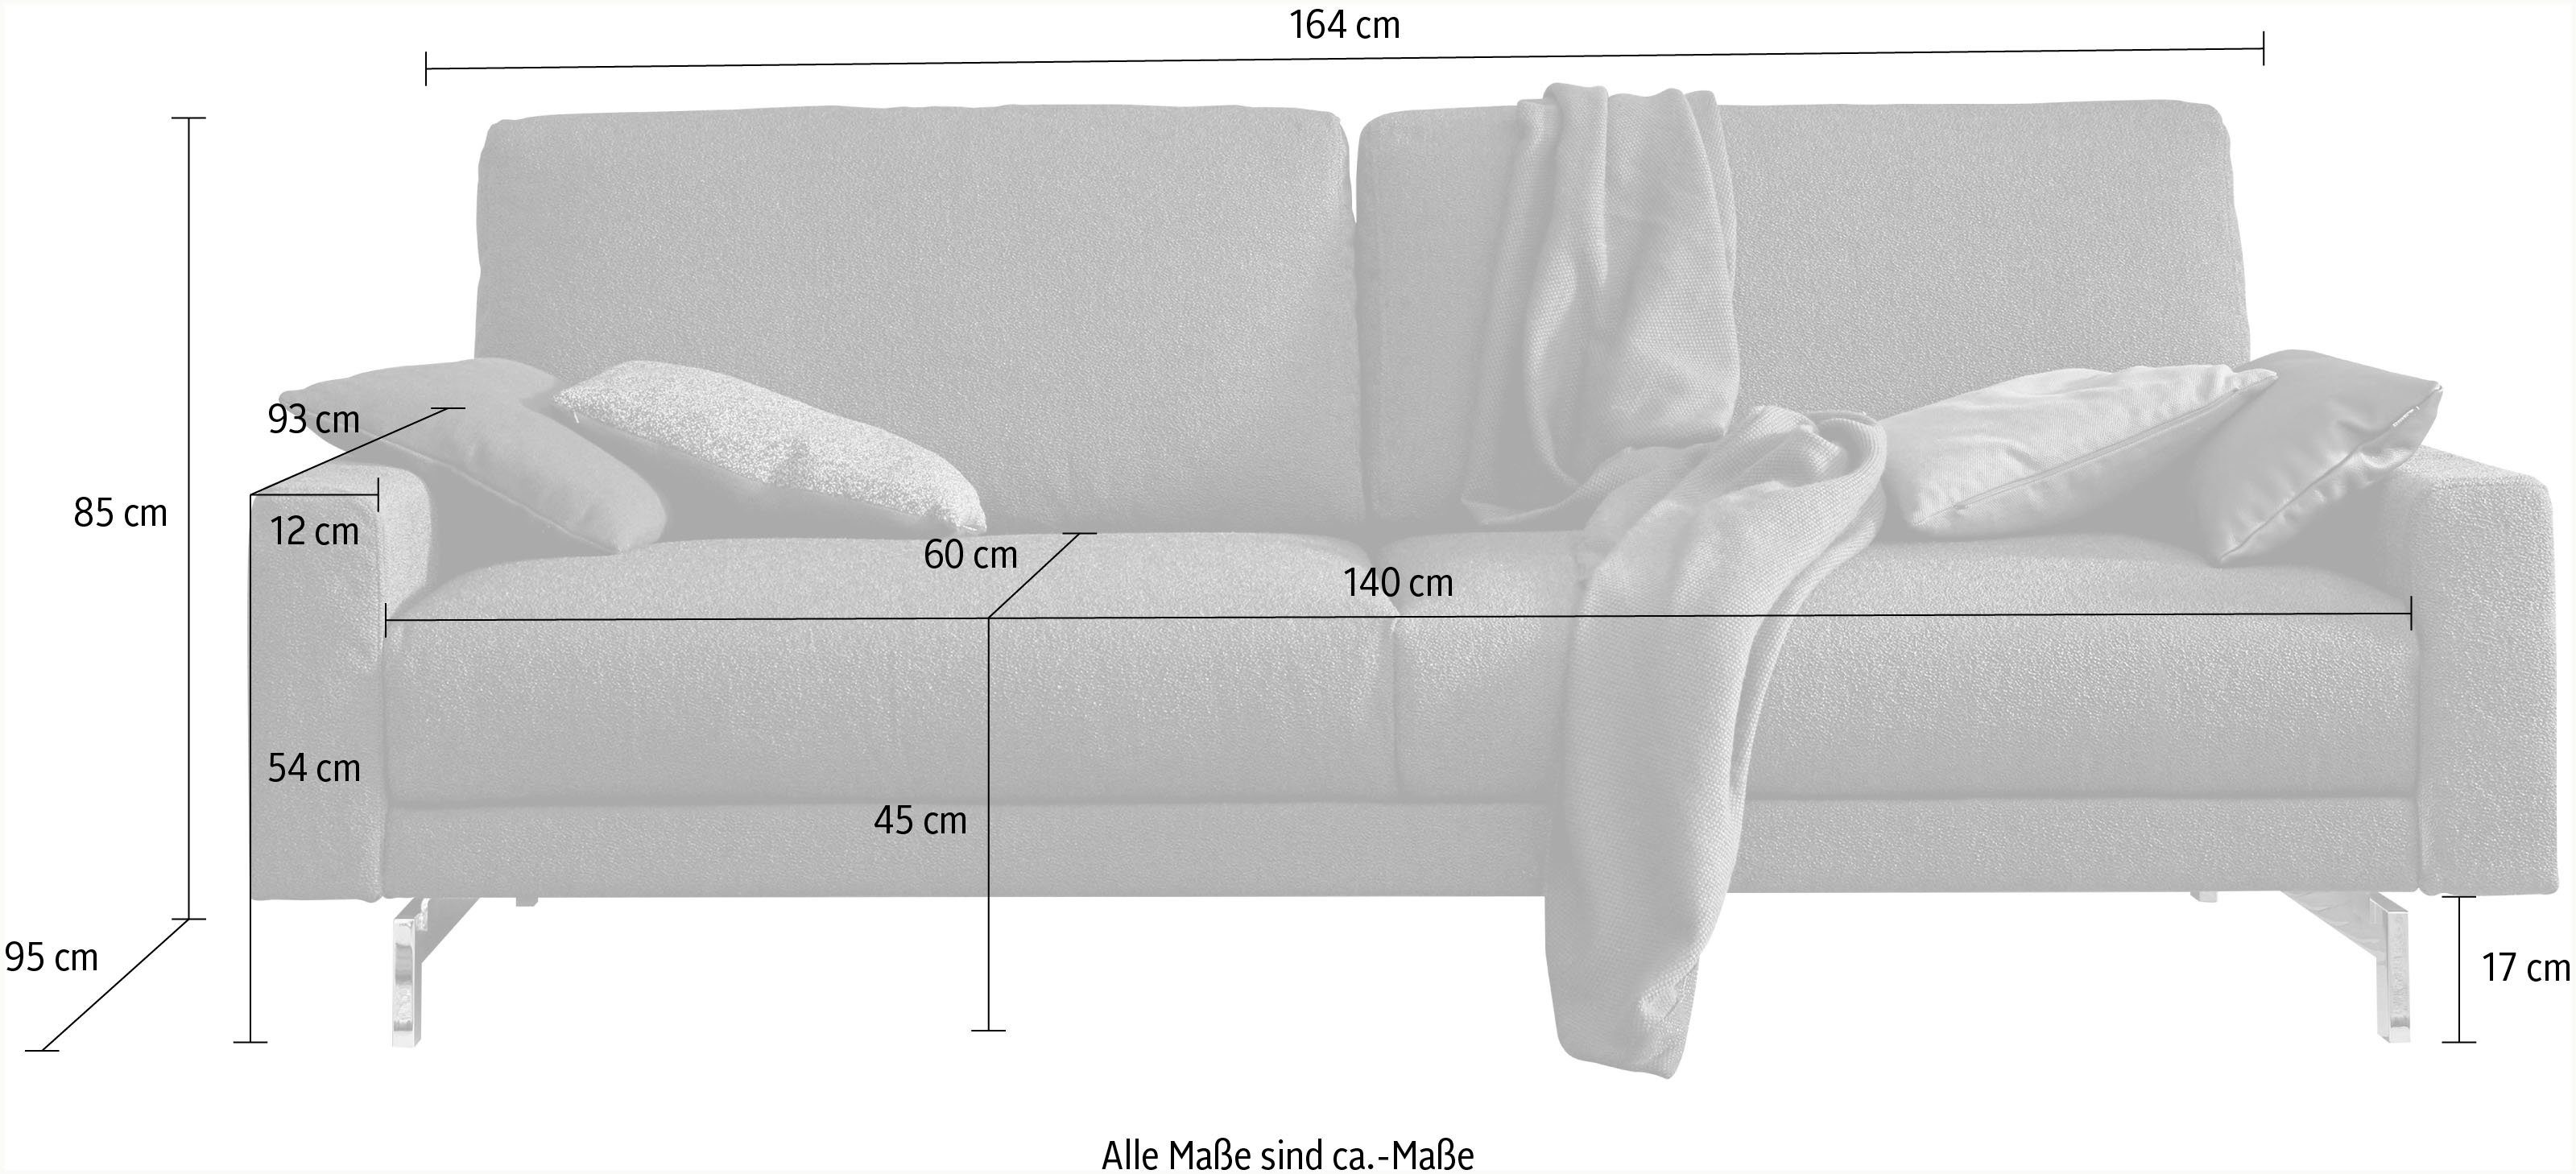 hülsta Armlehne cm niedrig, hs.450, 2-Sitzer Fuß Breite 164 sofa glänzend, chromfarben